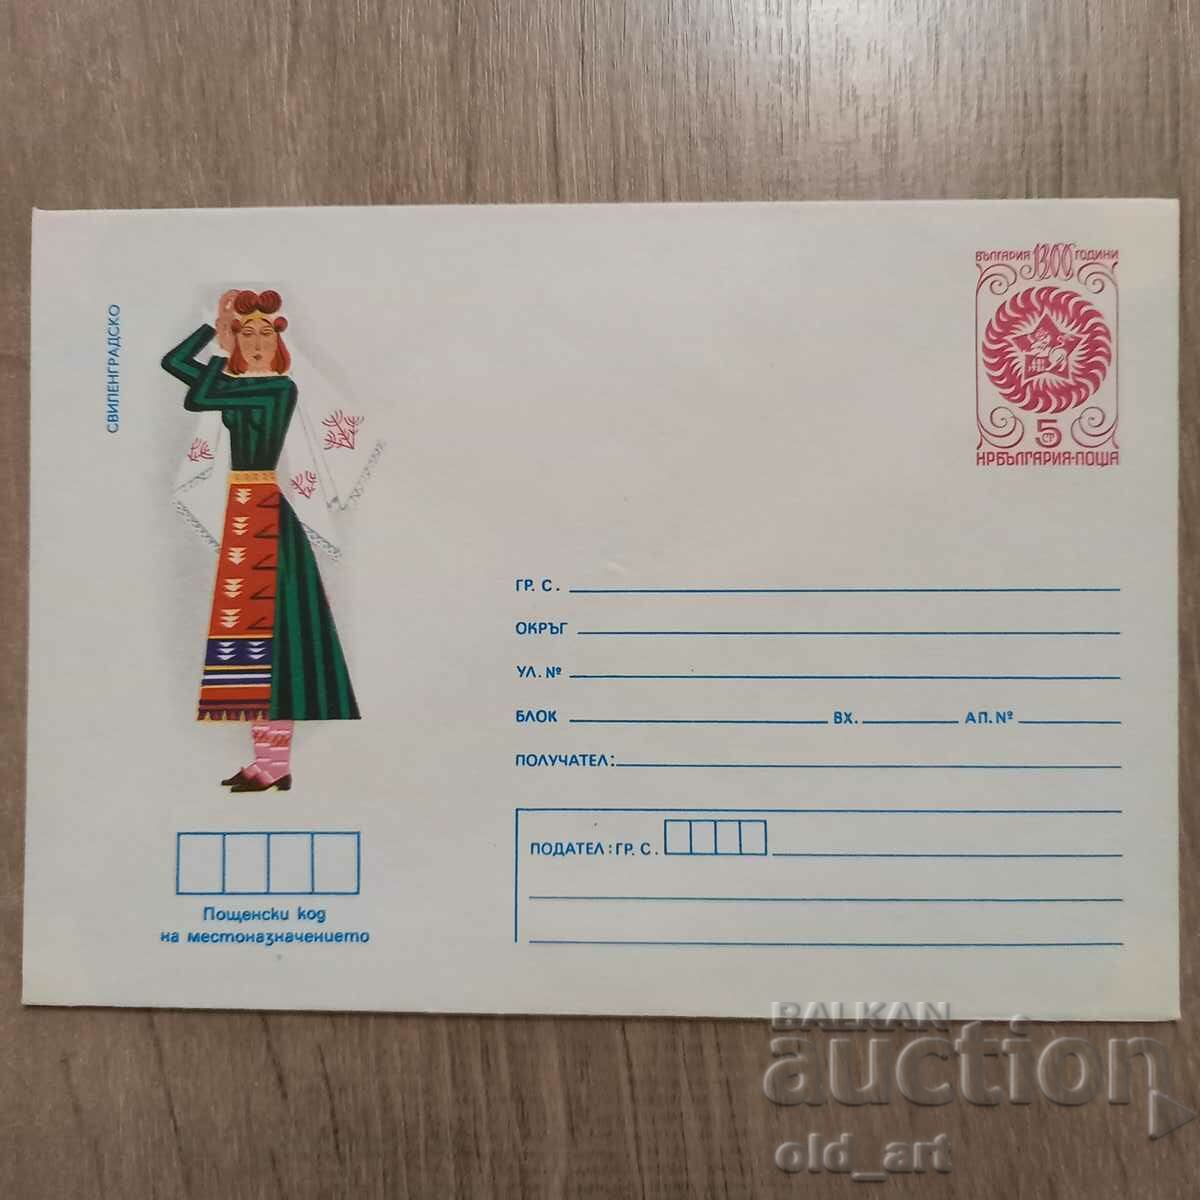 Postal envelope - Folk costumes - Svilengradsko